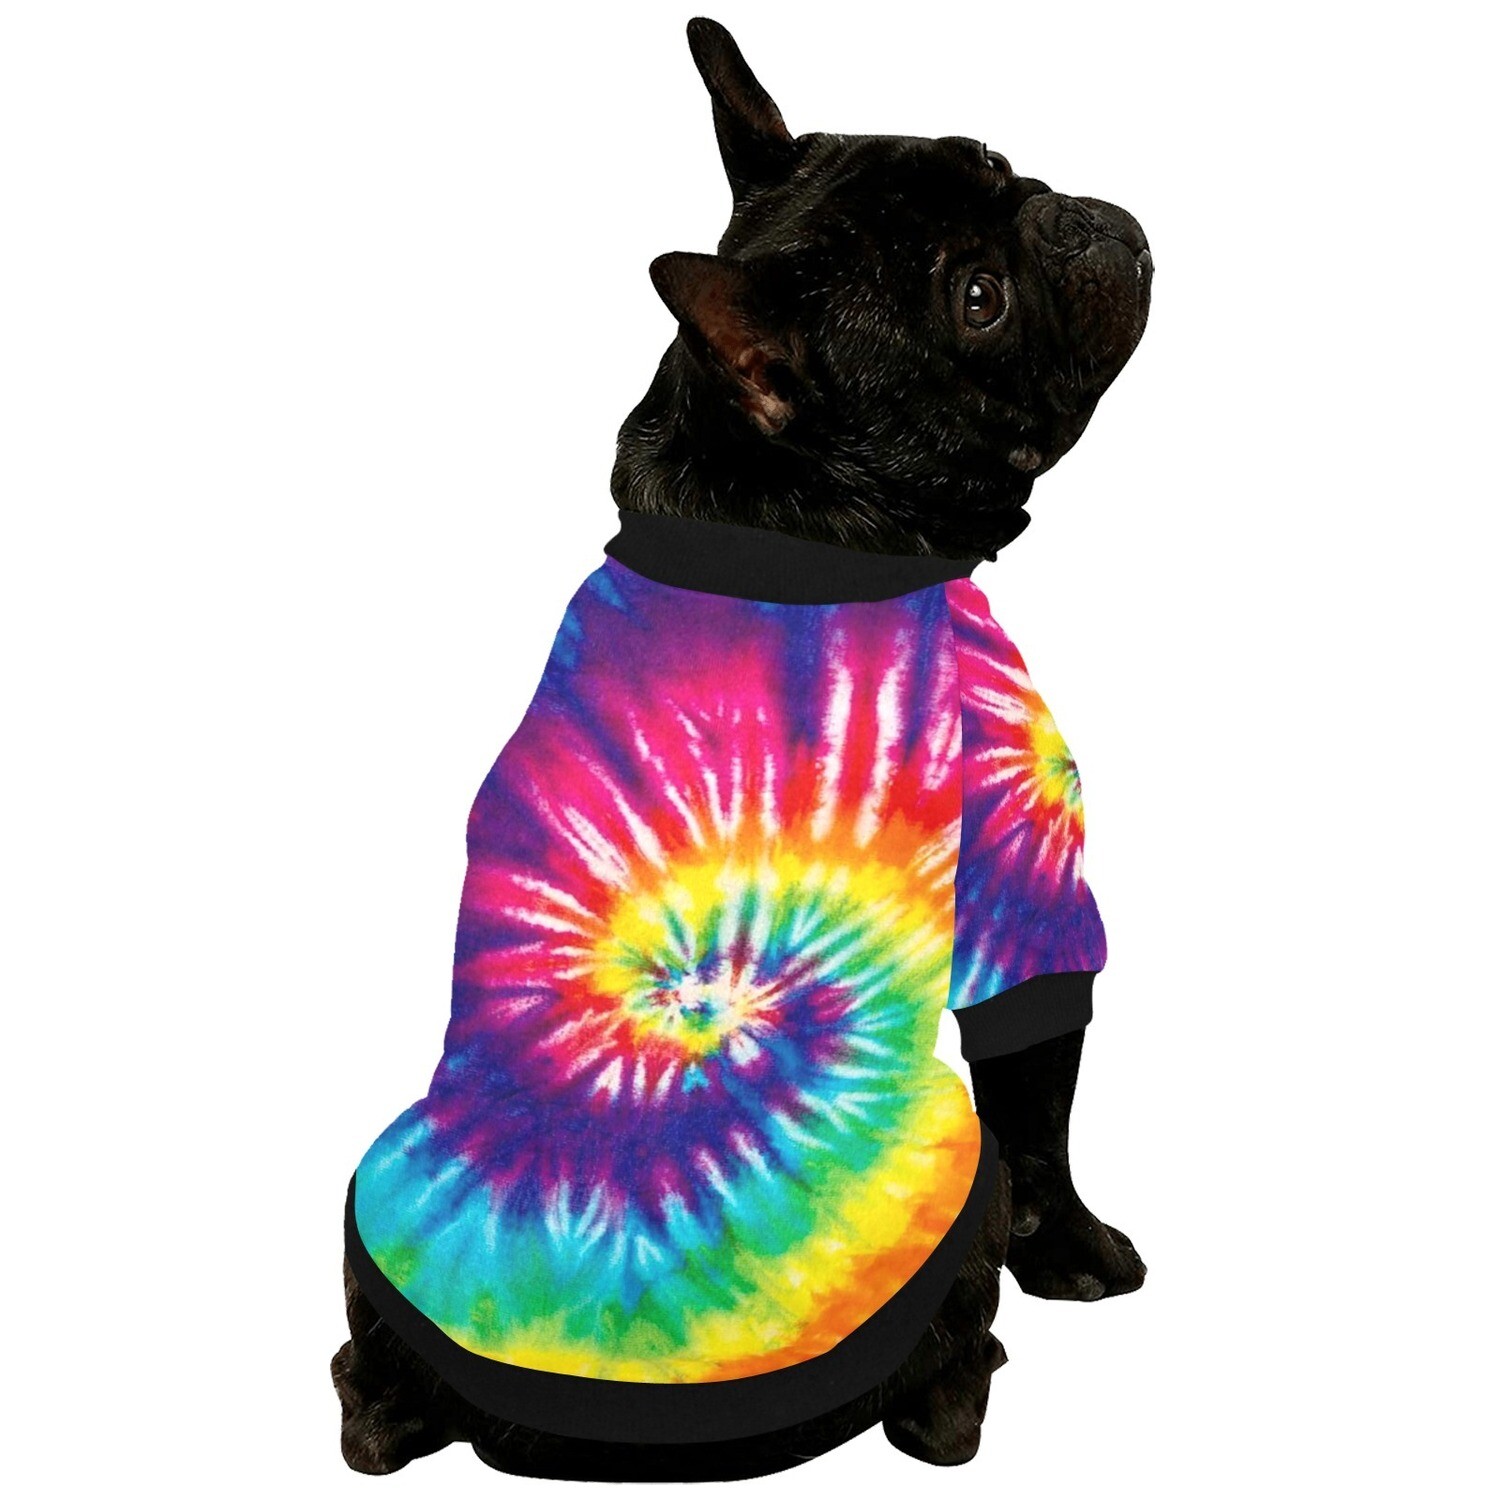 🐕☮︎ Dog Sweatshirt rainbow Tie dye, Hippie, Fuzzy warm buttoned Dog Sweater, Dog clothes, Dog clothing, 6 sizes XS to 2XL, Gift for dogs